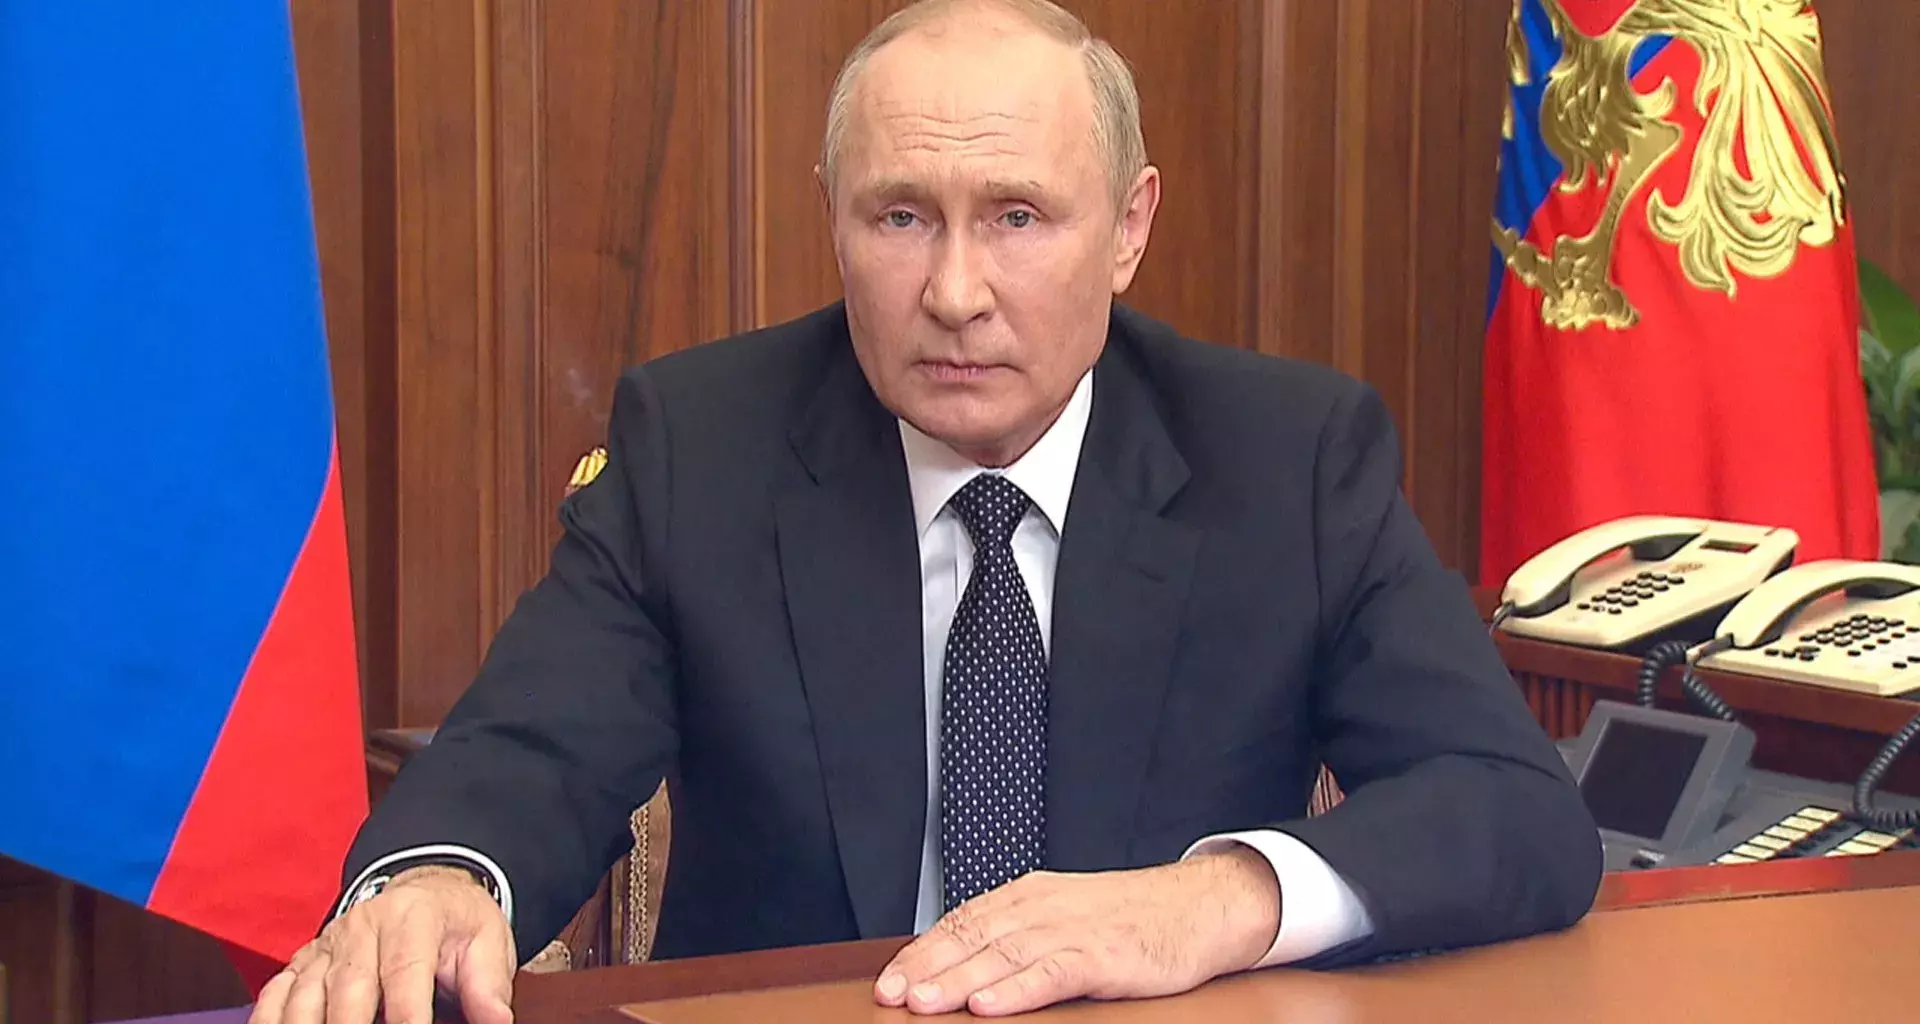 Vladimir Putin endurece su postura en Ucrania